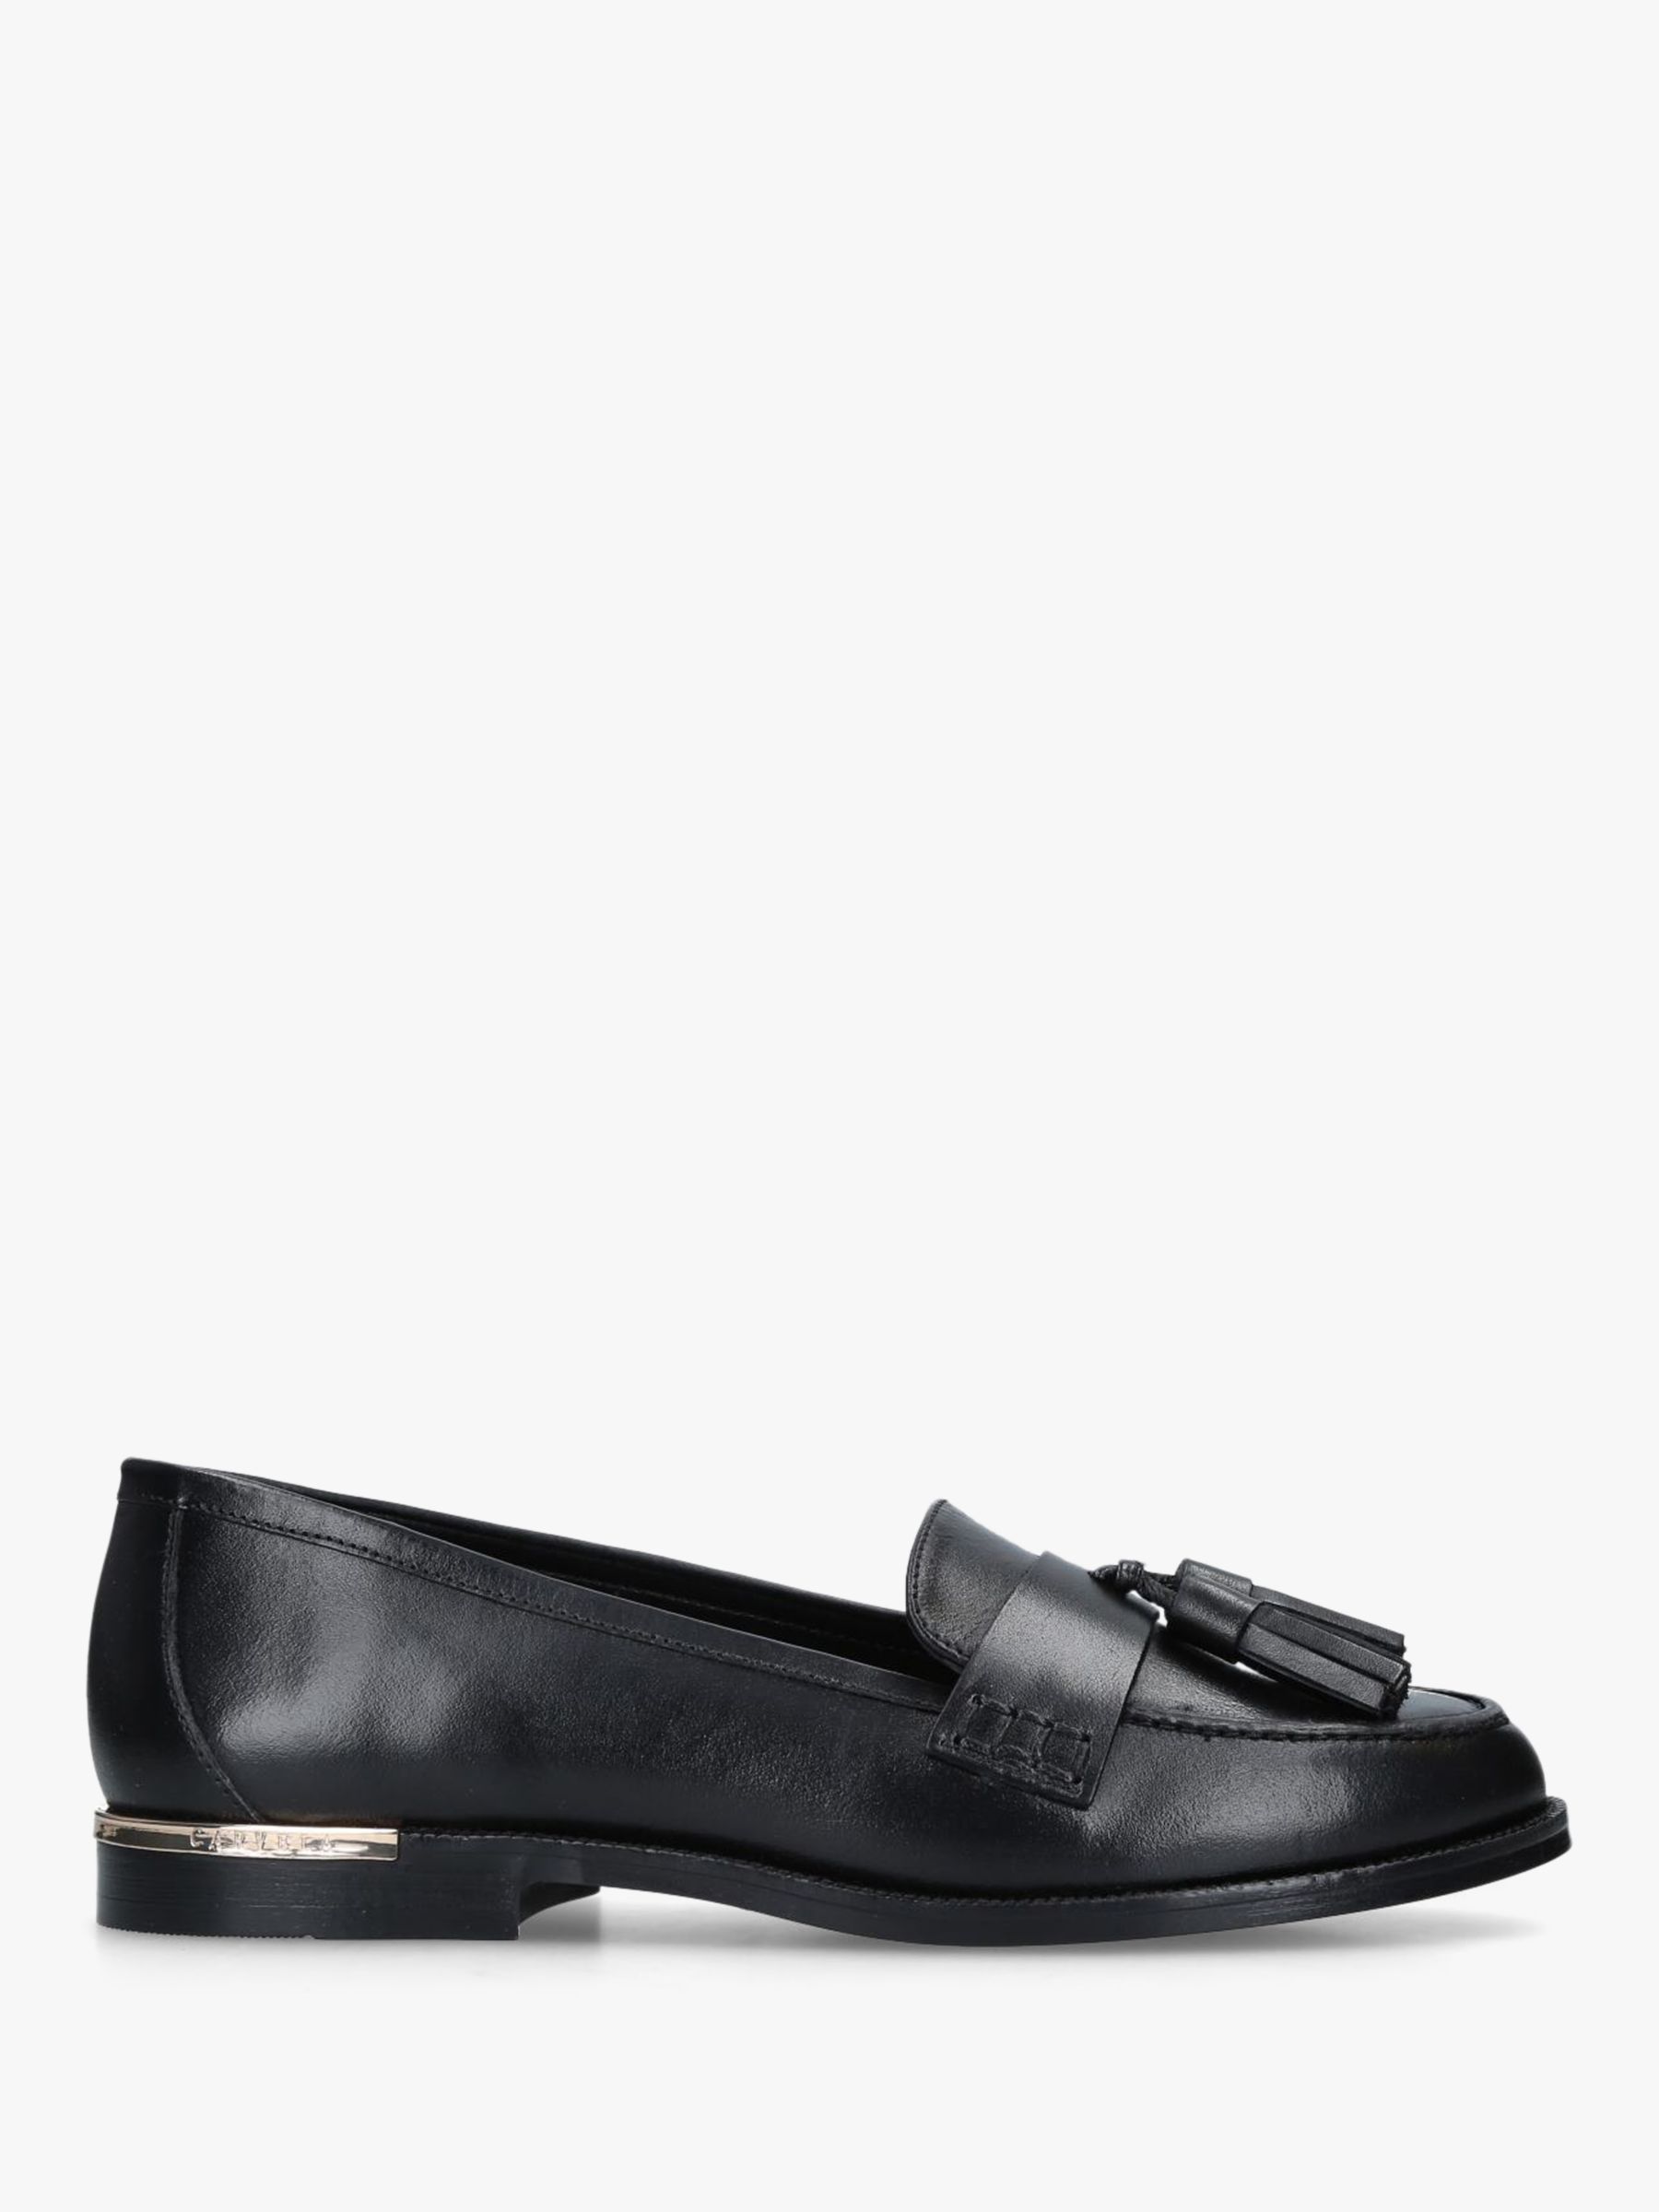 Carvela Mercury Loafers, Black Leather 